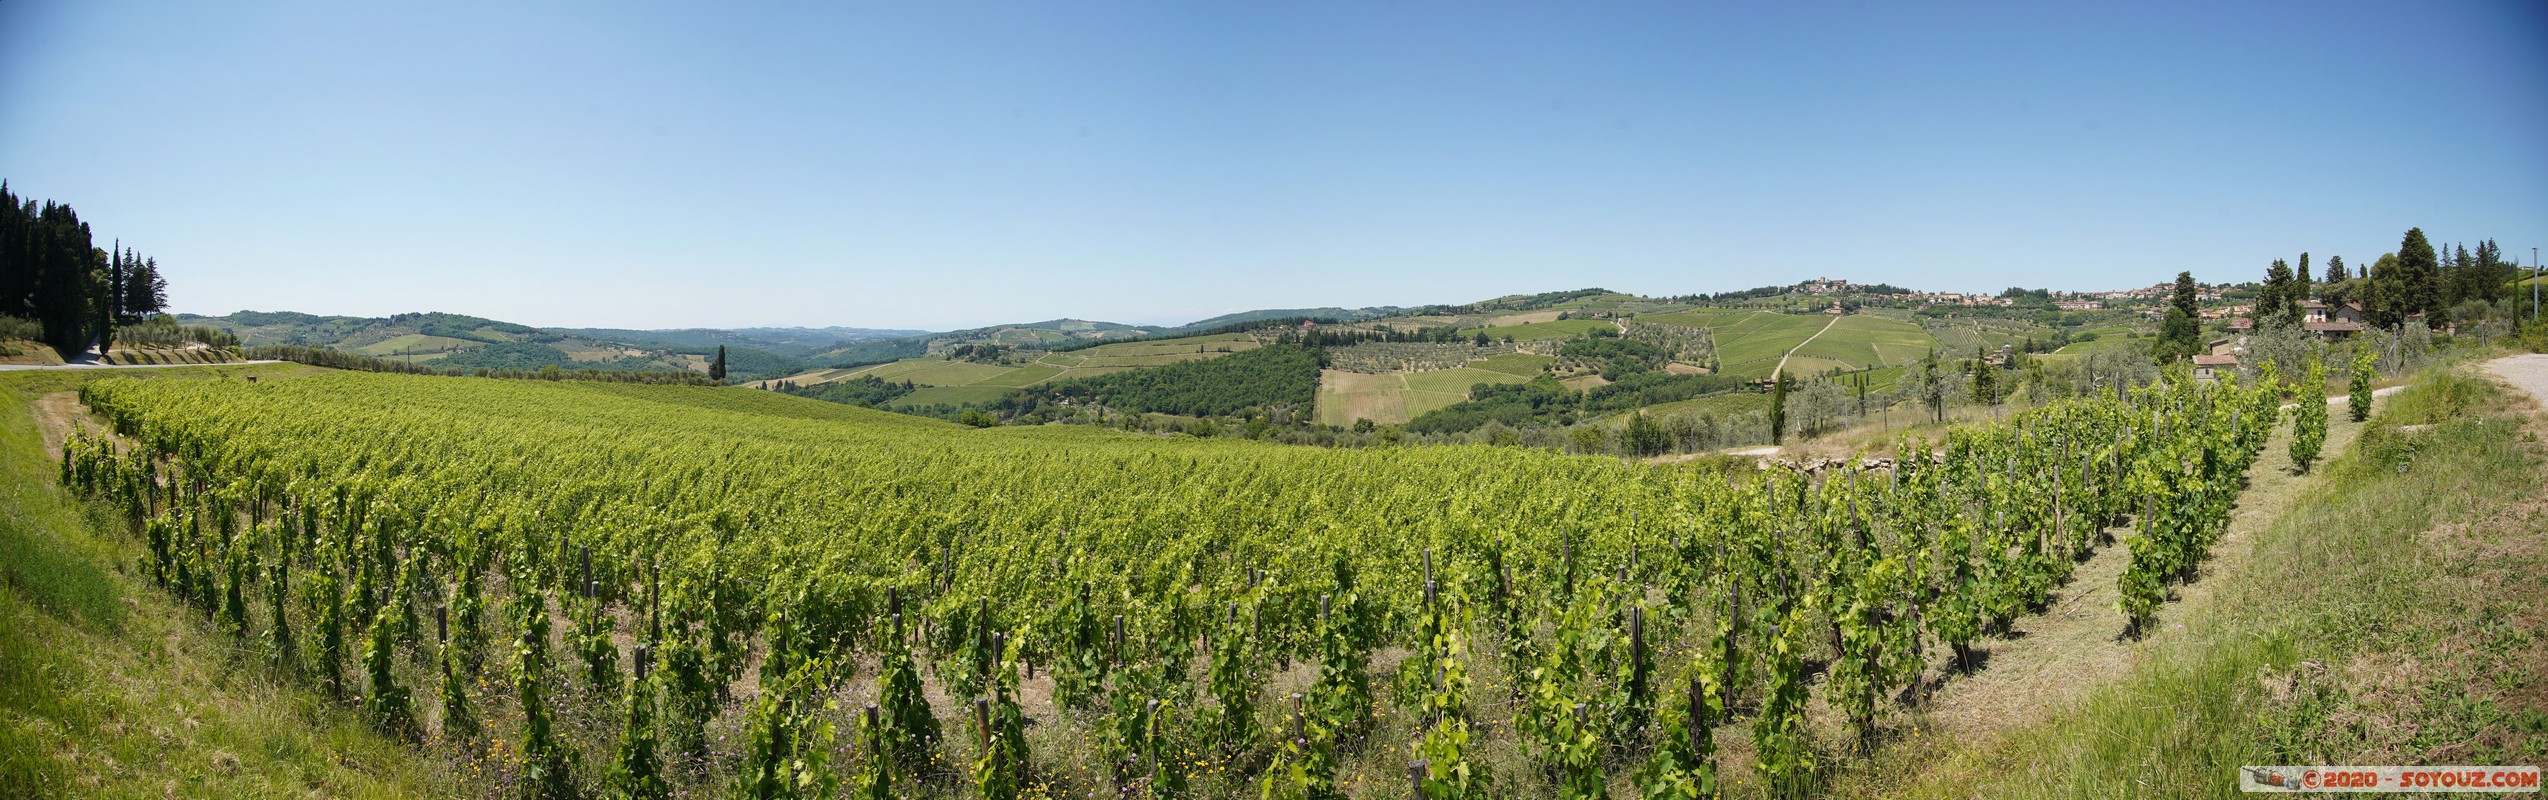 Toscana - Campagna del Chianti
Mots-clés: Toscana Chianti paysage vignes panorama